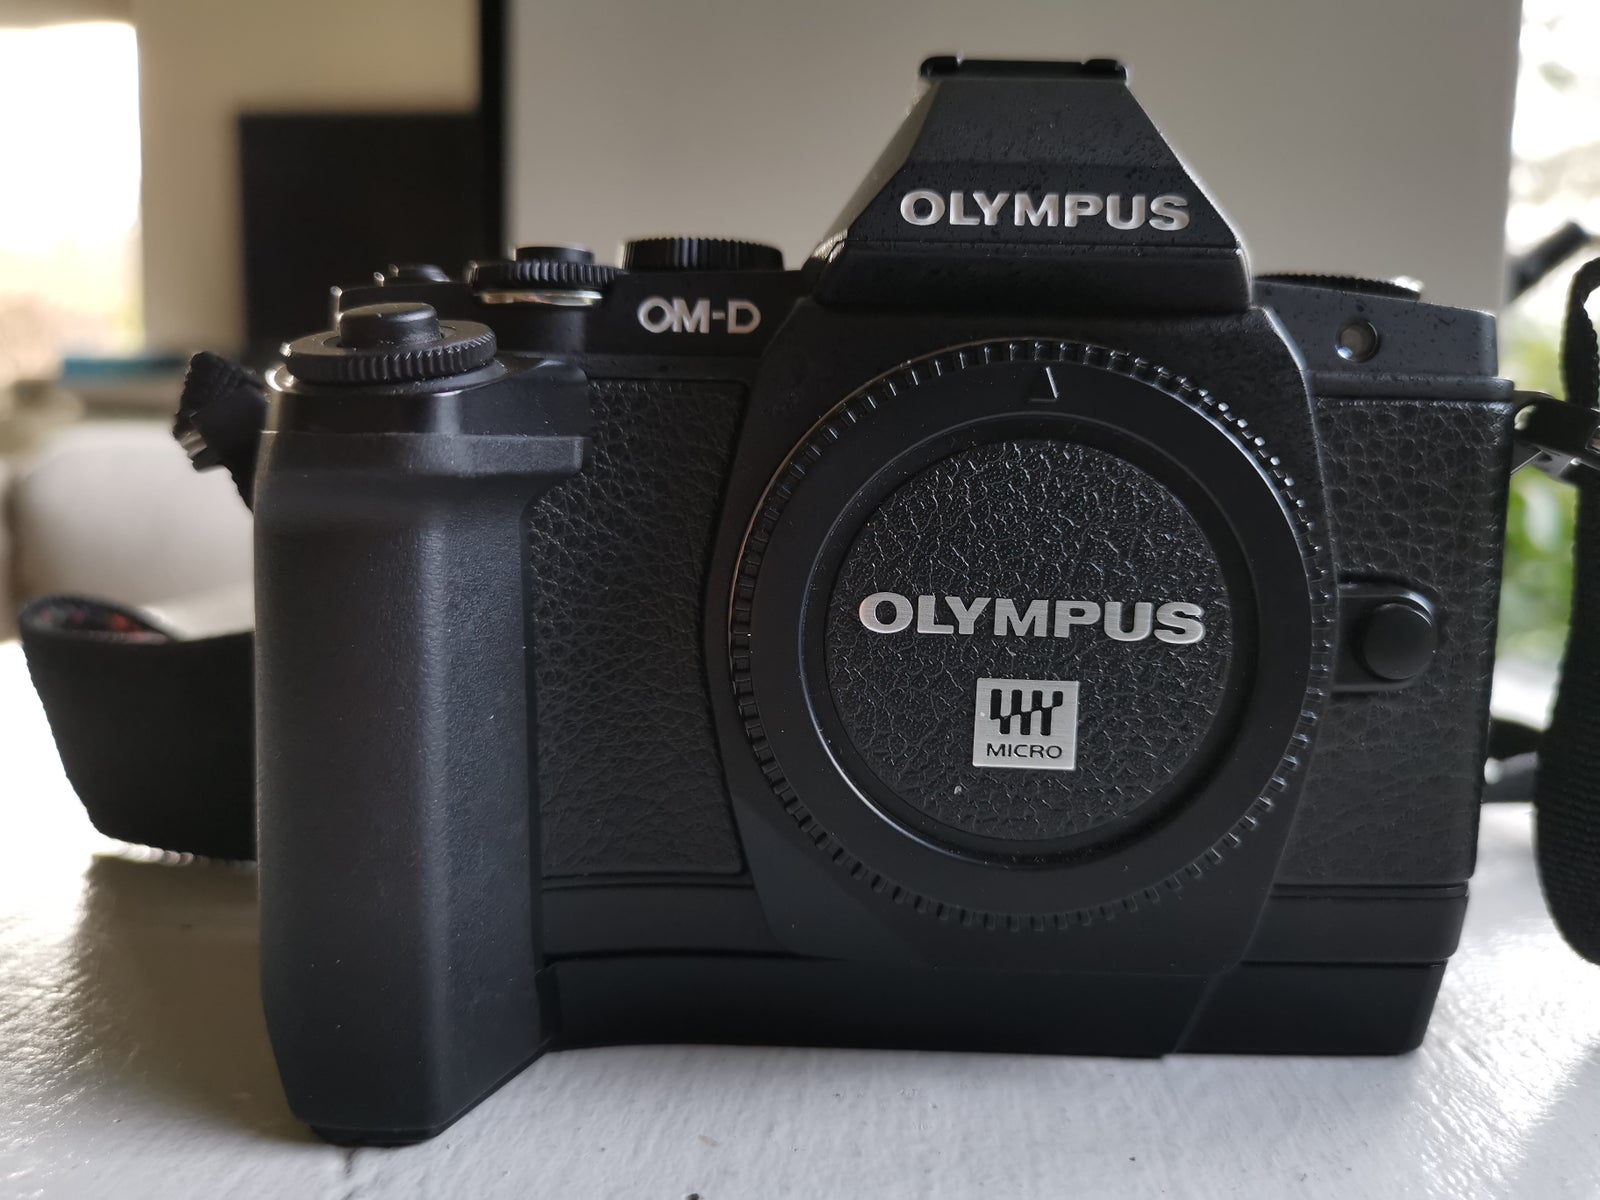 Olympus Olympus Om D E-M5, 16.1 megapixels, Perfekt